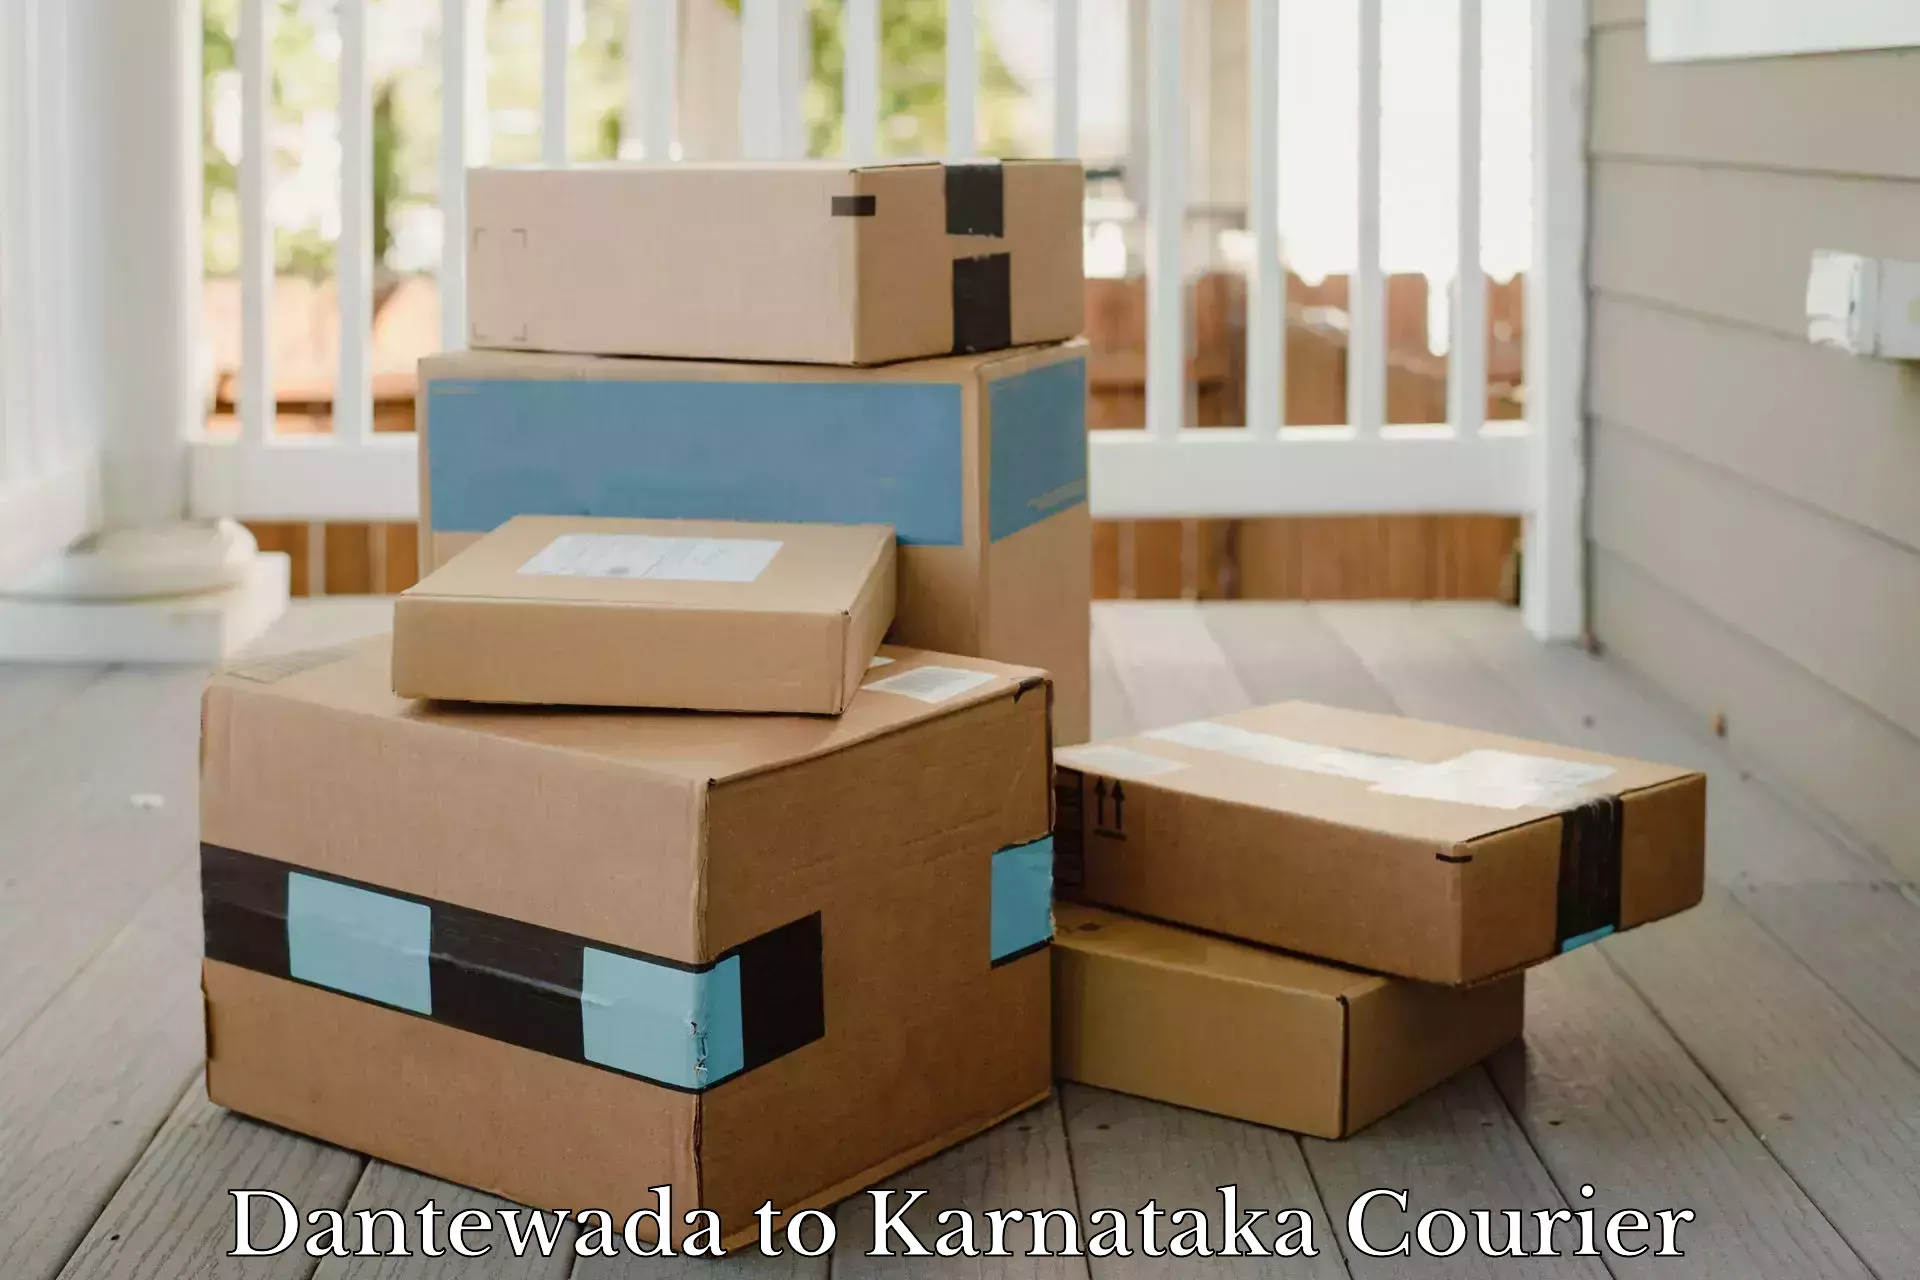 Delivery service partnership Dantewada to Karnataka